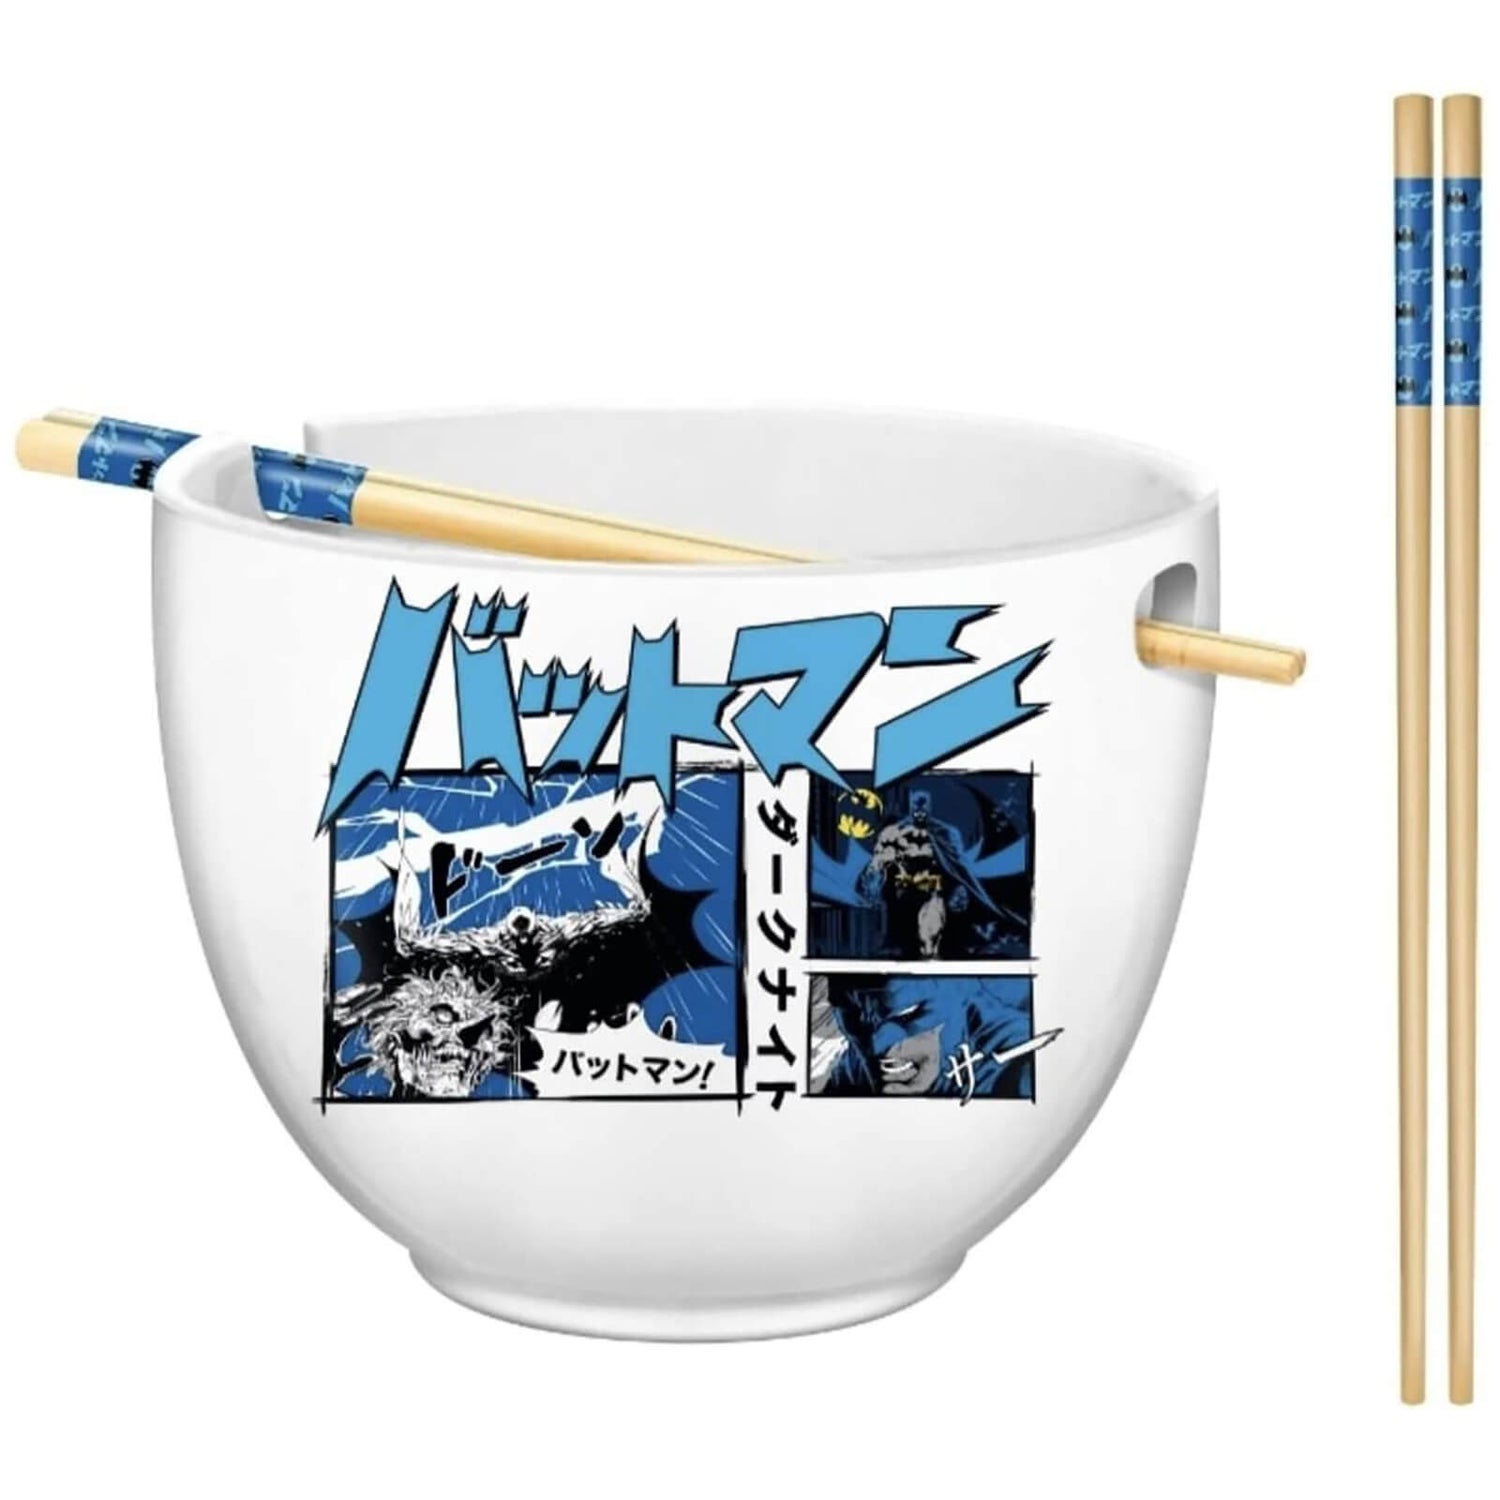 DC Batman Ceramic Ramen Bowl with Chopsticks